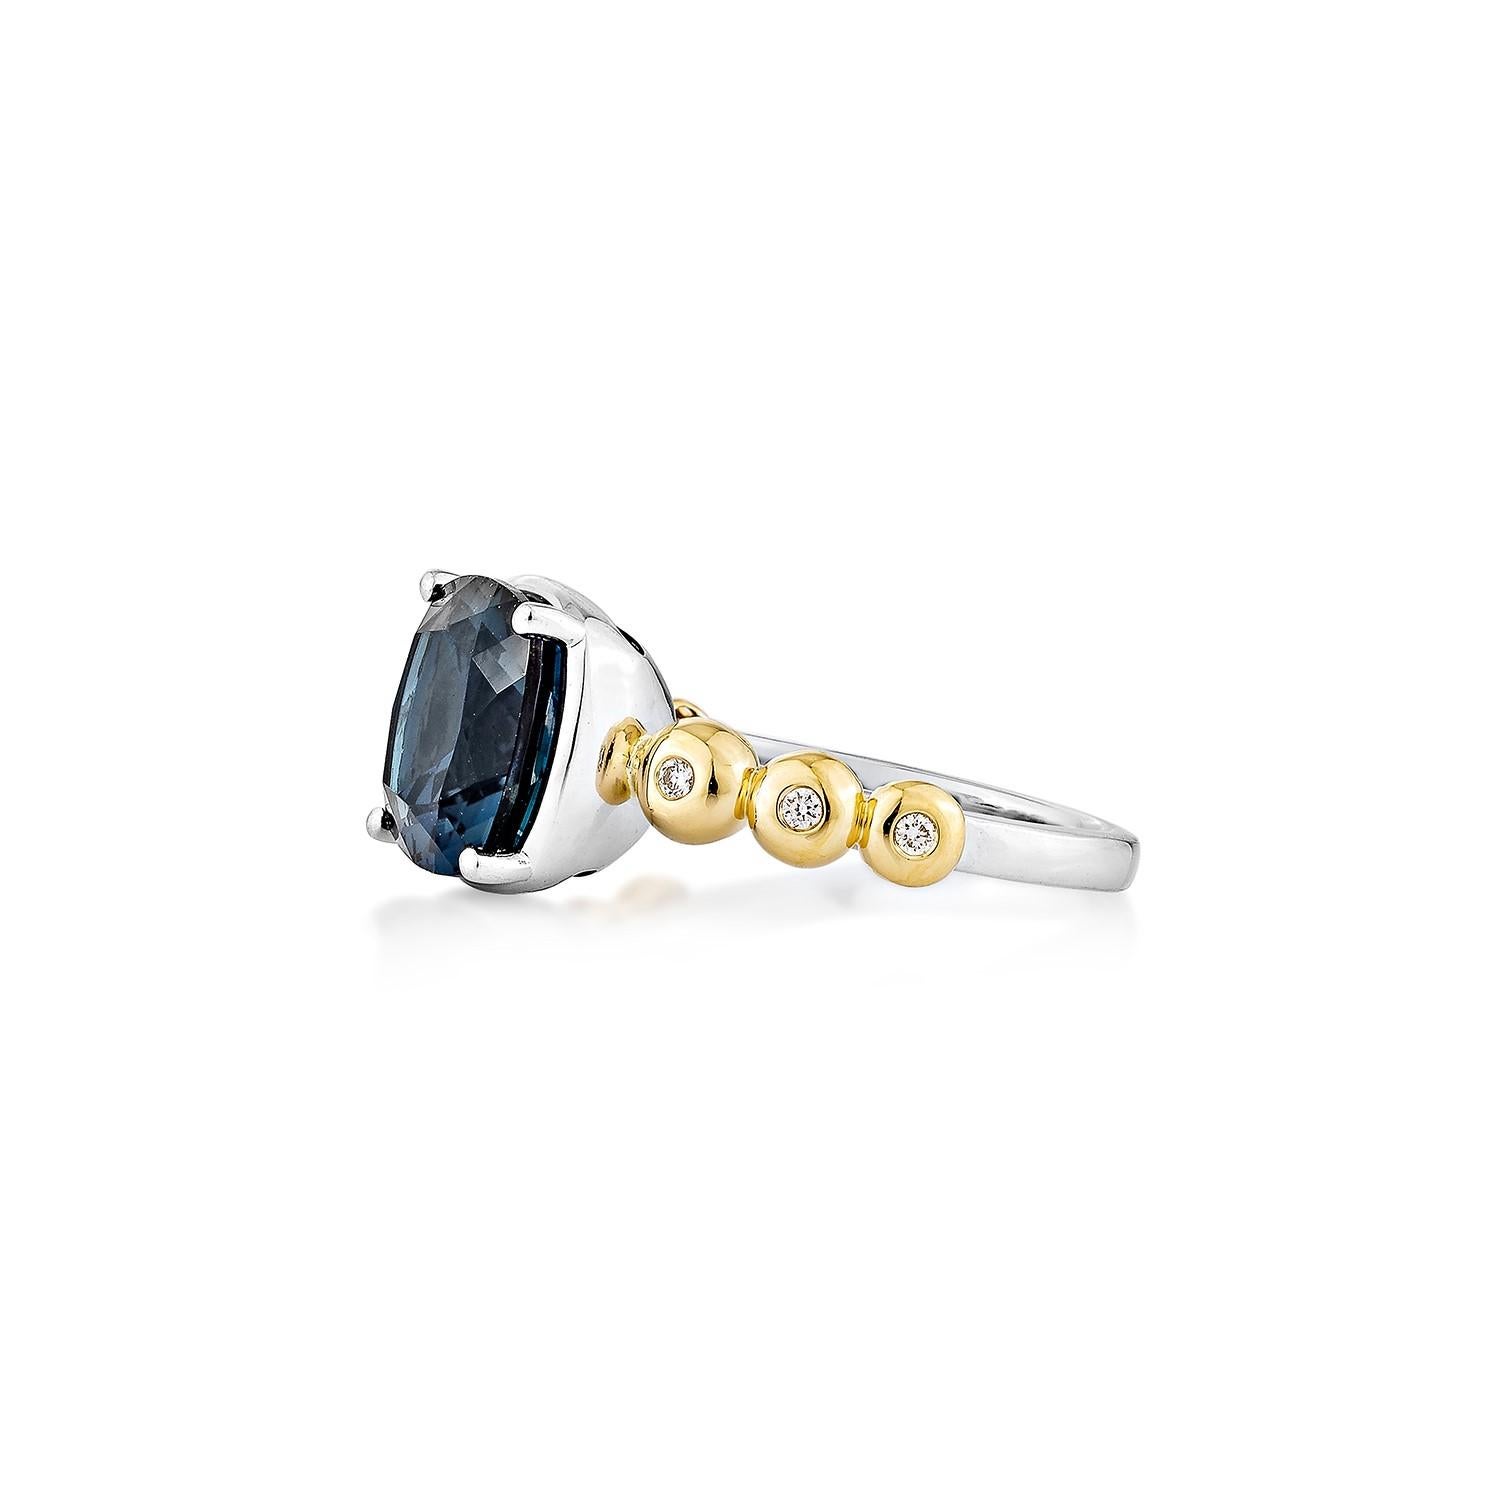 Cushion Cut 4.77 Carat London Blue Topaz Fancy Ring in 18KWYG with White Diamond. For Sale